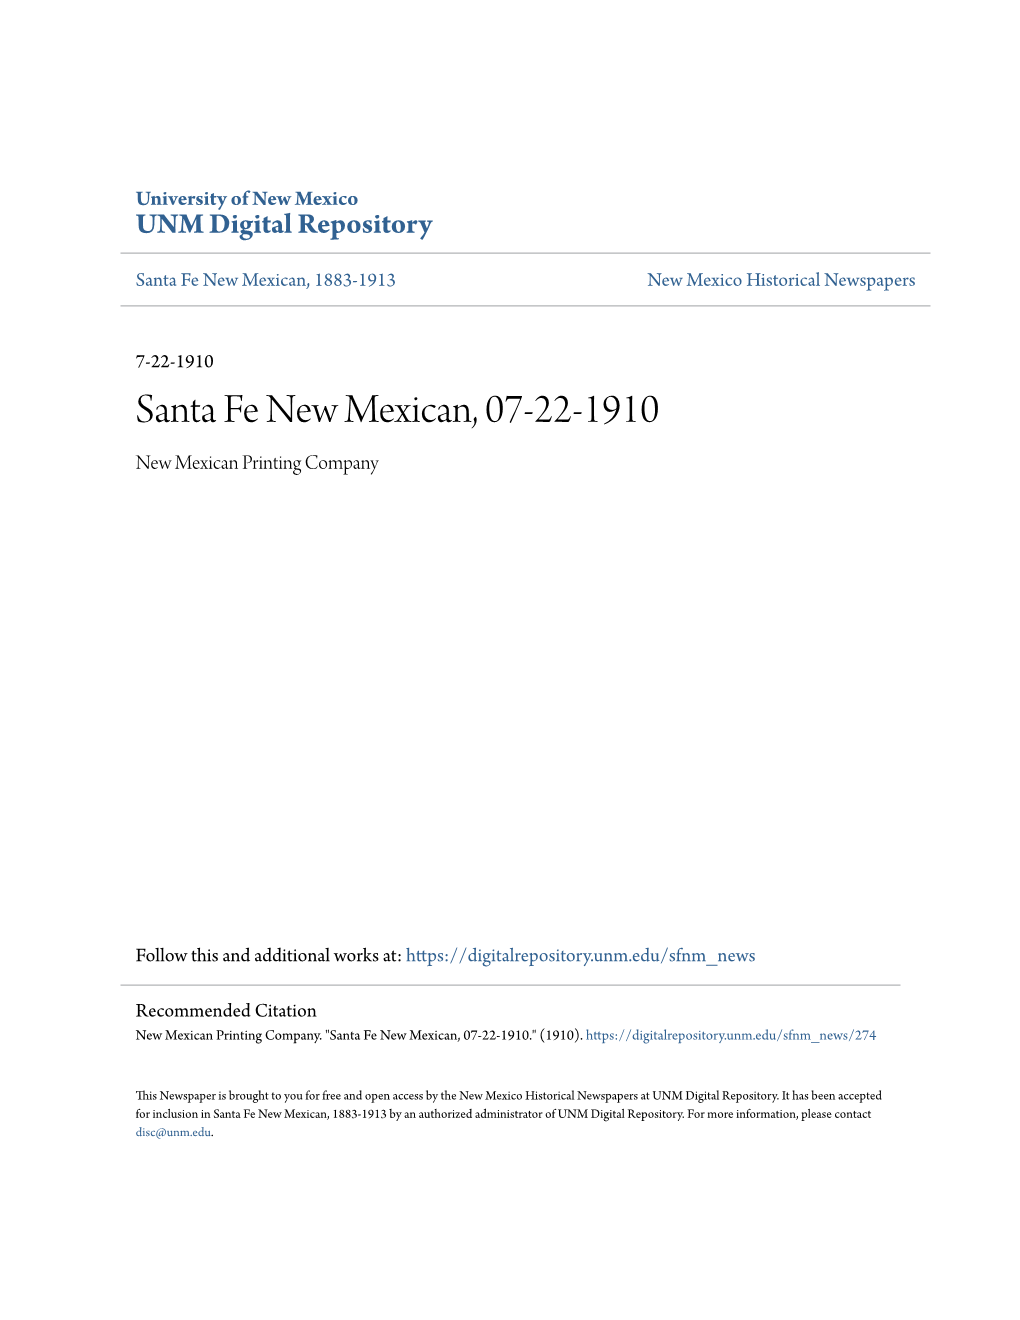 Santa Fe New Mexican, 07-22-1910 New Mexican Printing Company